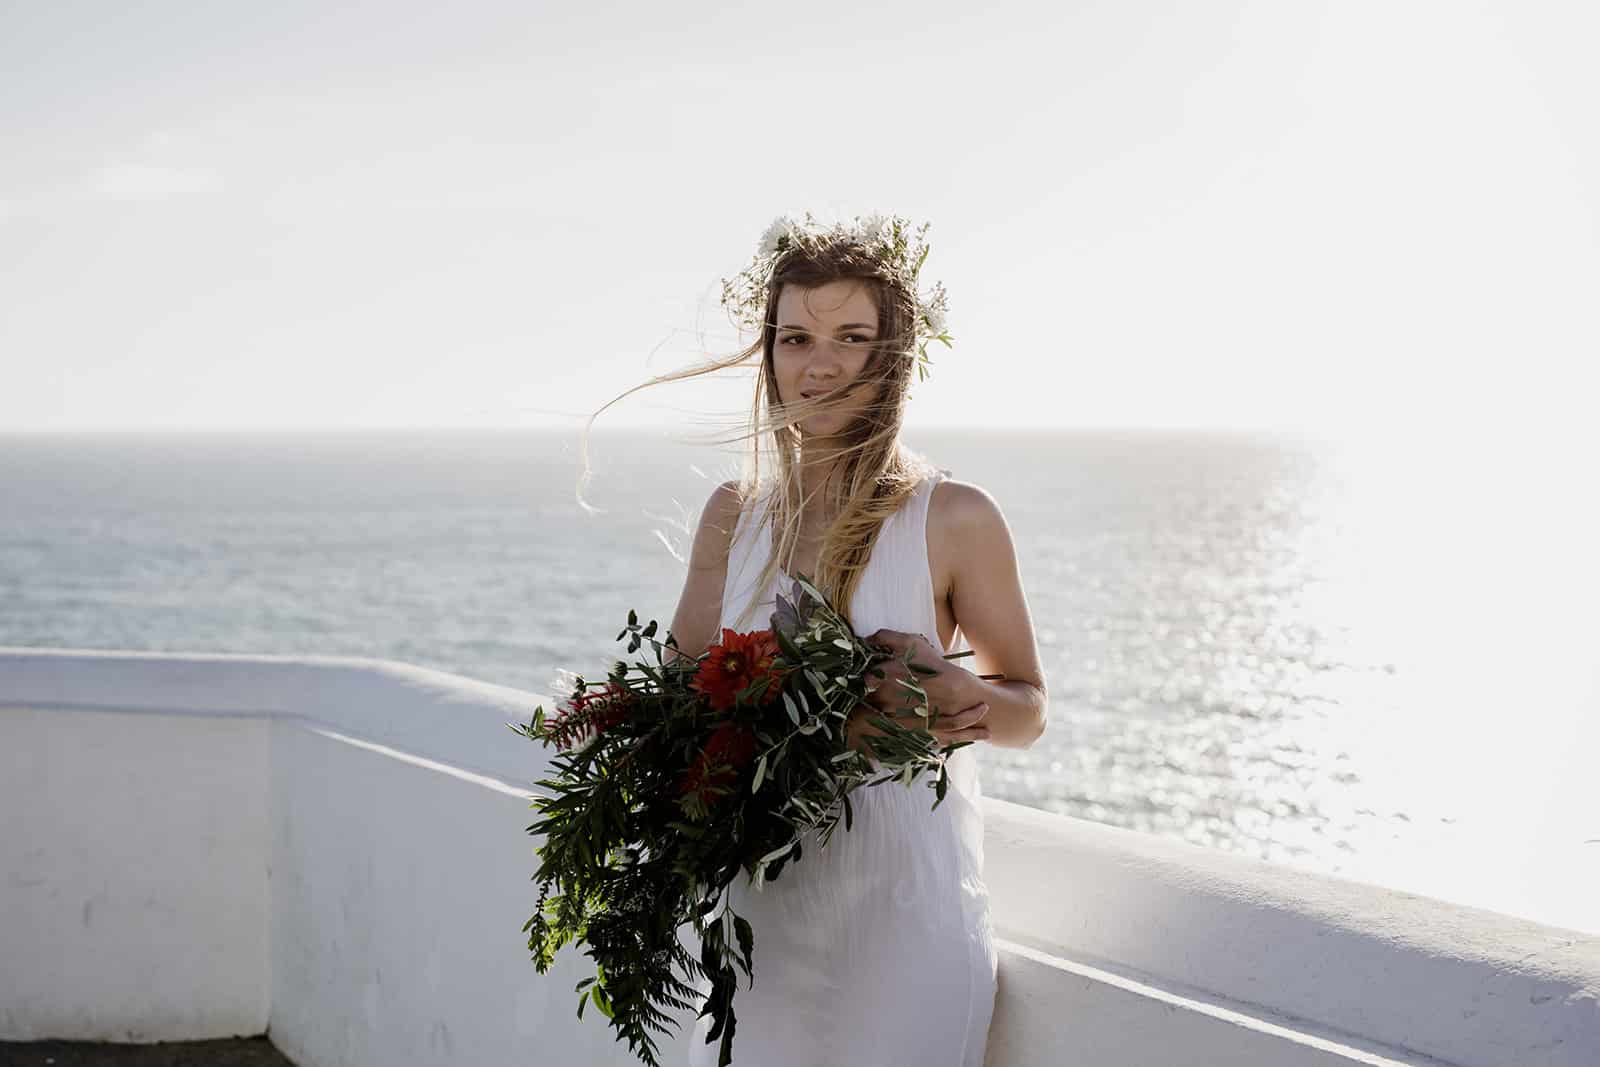 Tania-Flores-Hochzeitsfotograf-Brautshooting-am-Strand-09